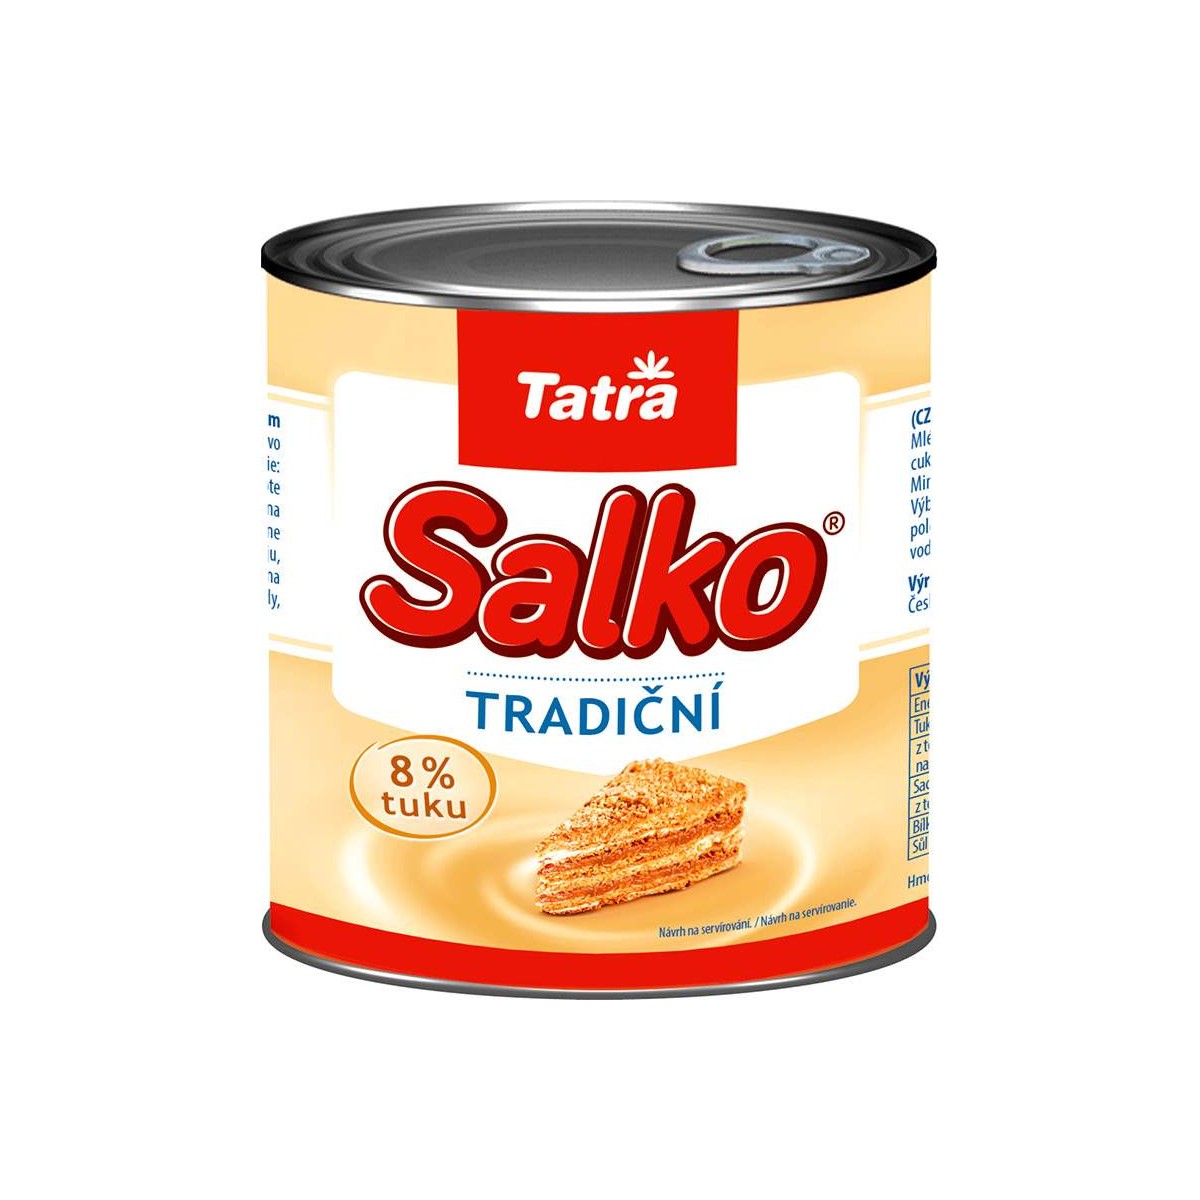 Tatra Salko zahuštěné mléko slazené 8% 1kg - plech